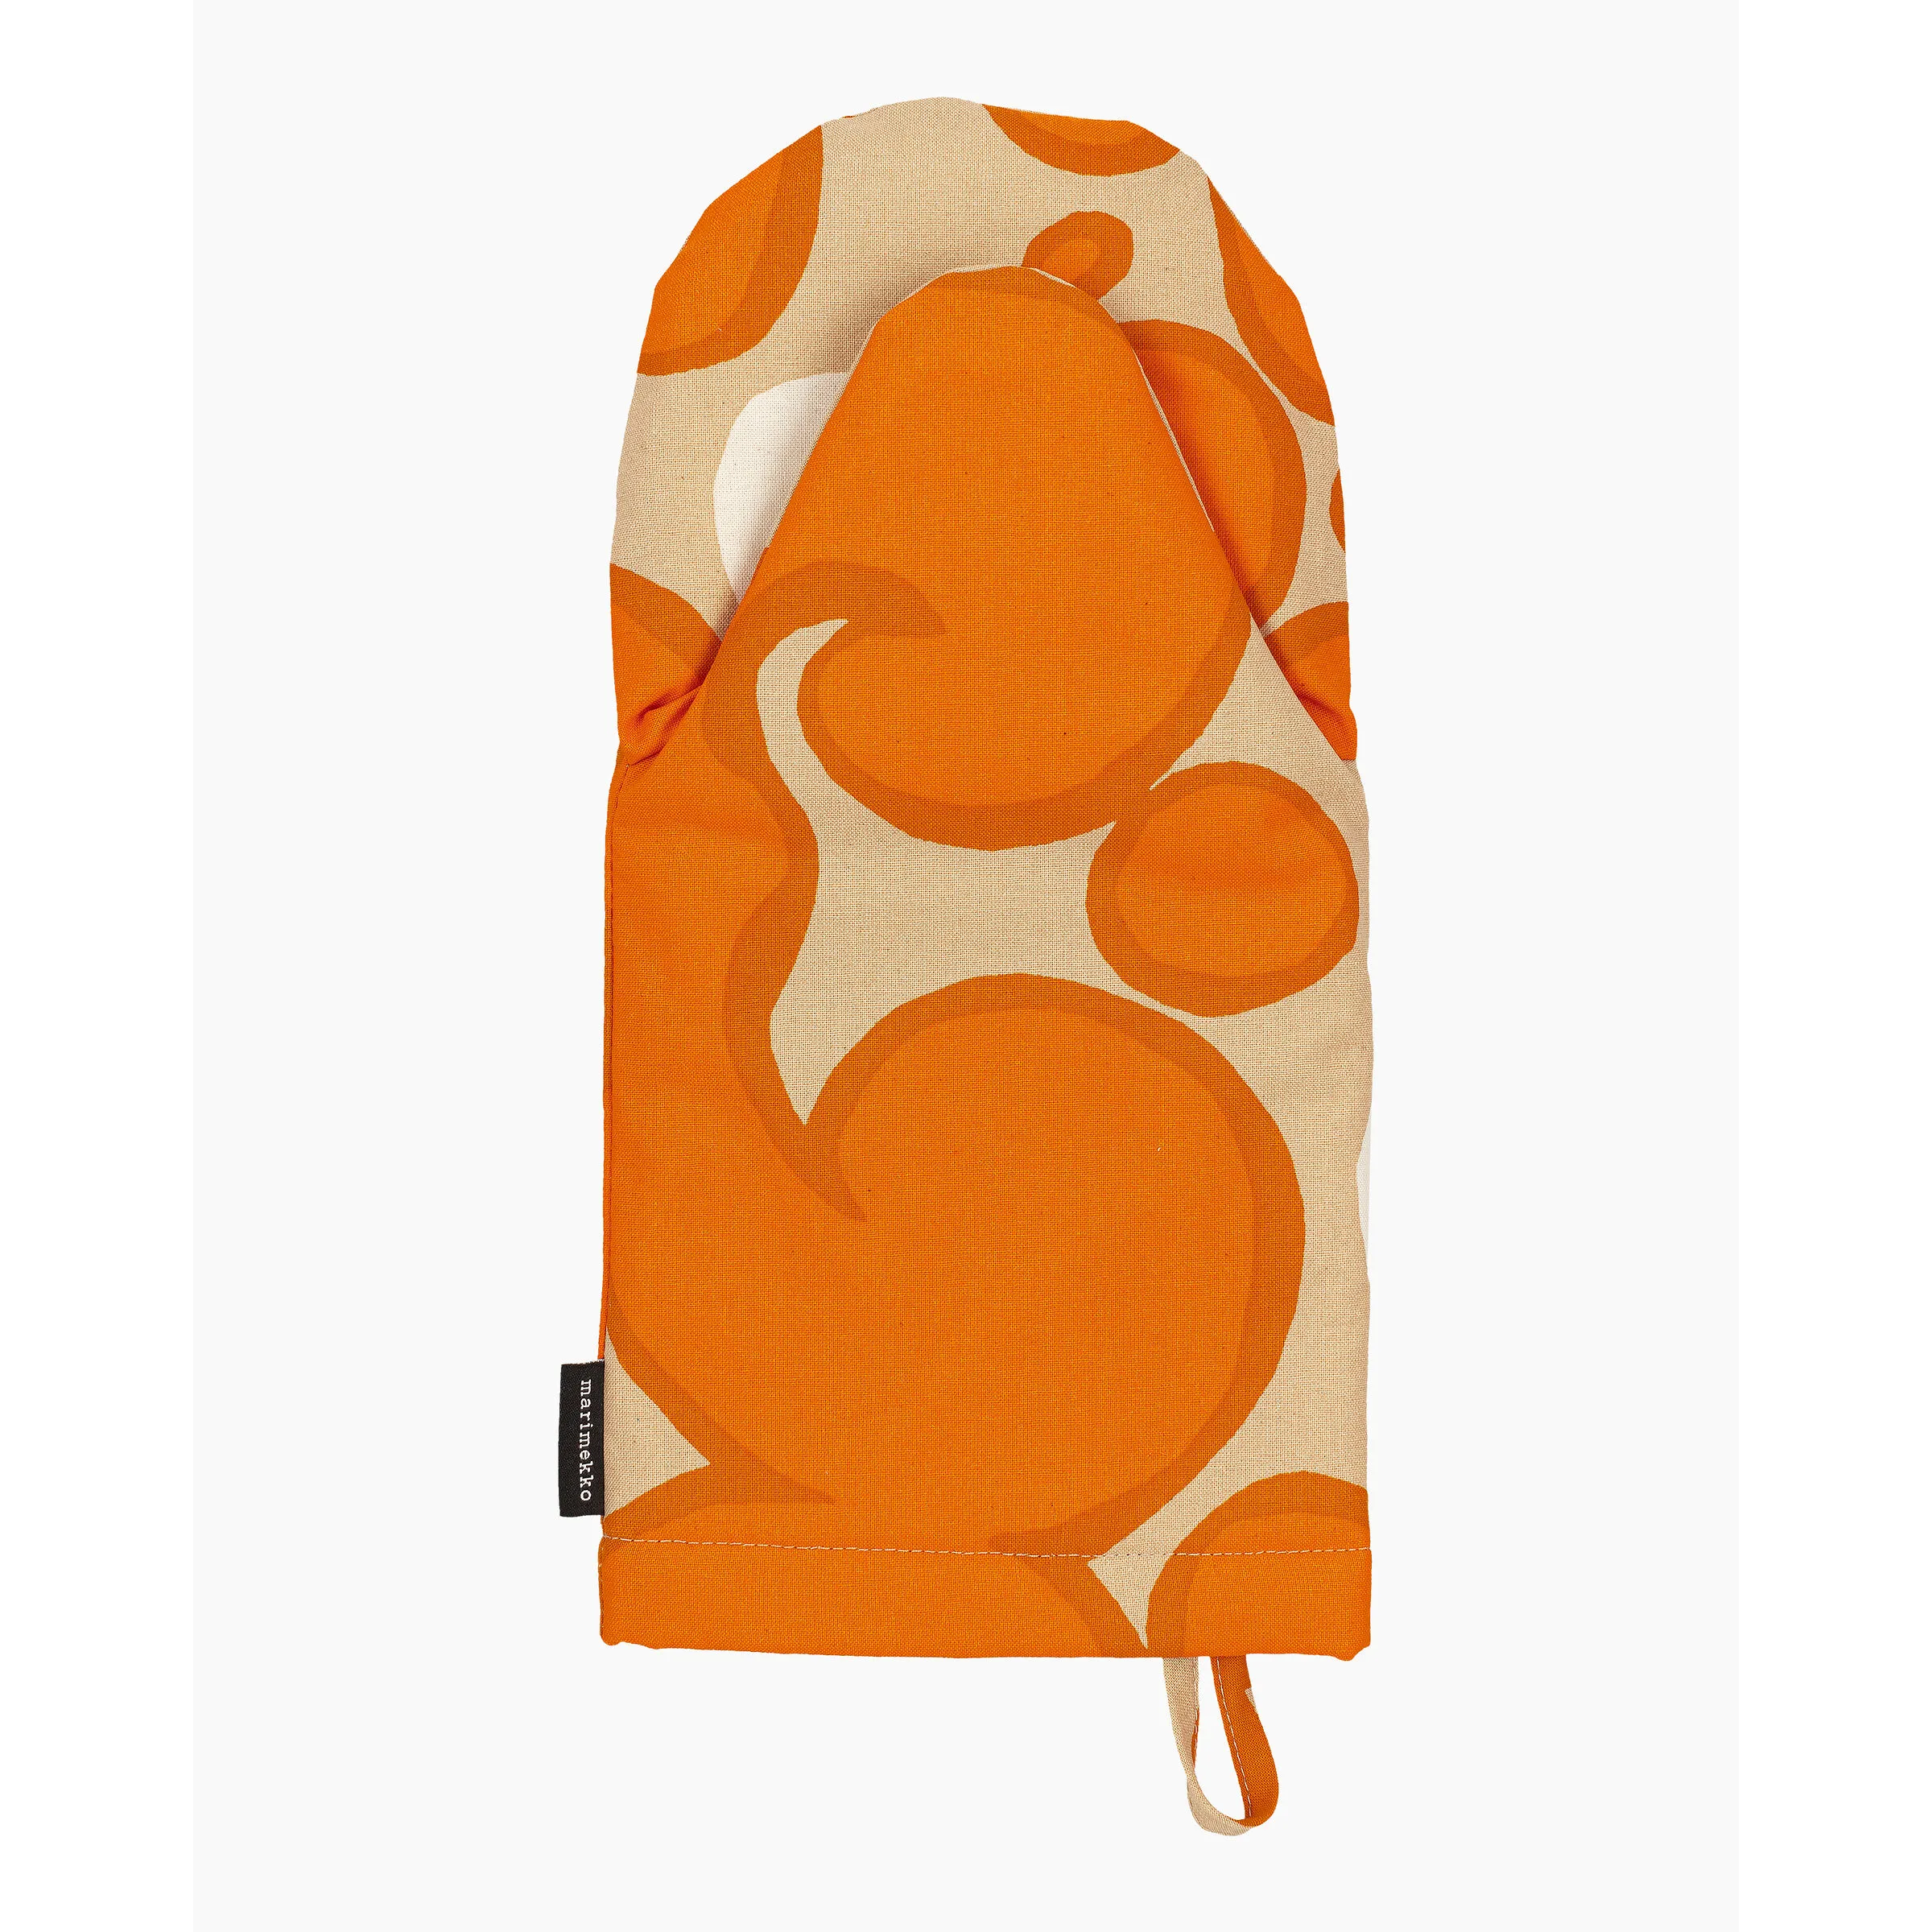 Manique gant keidas orange/beige * Marimekko